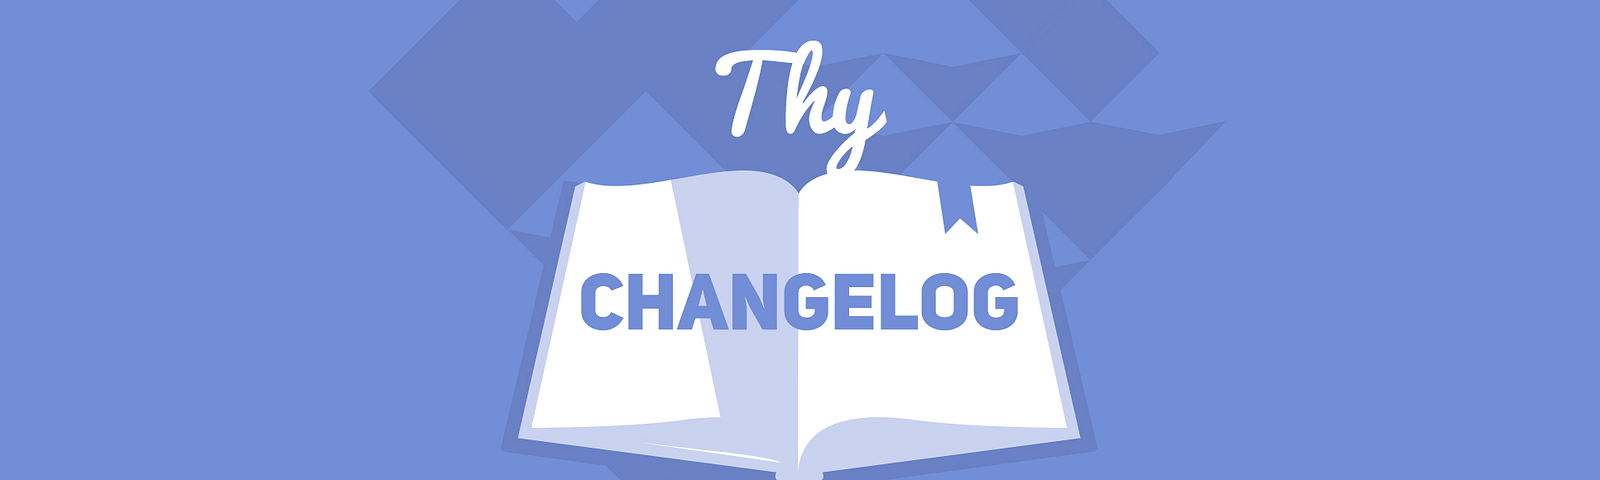 Changelog Discord Blog